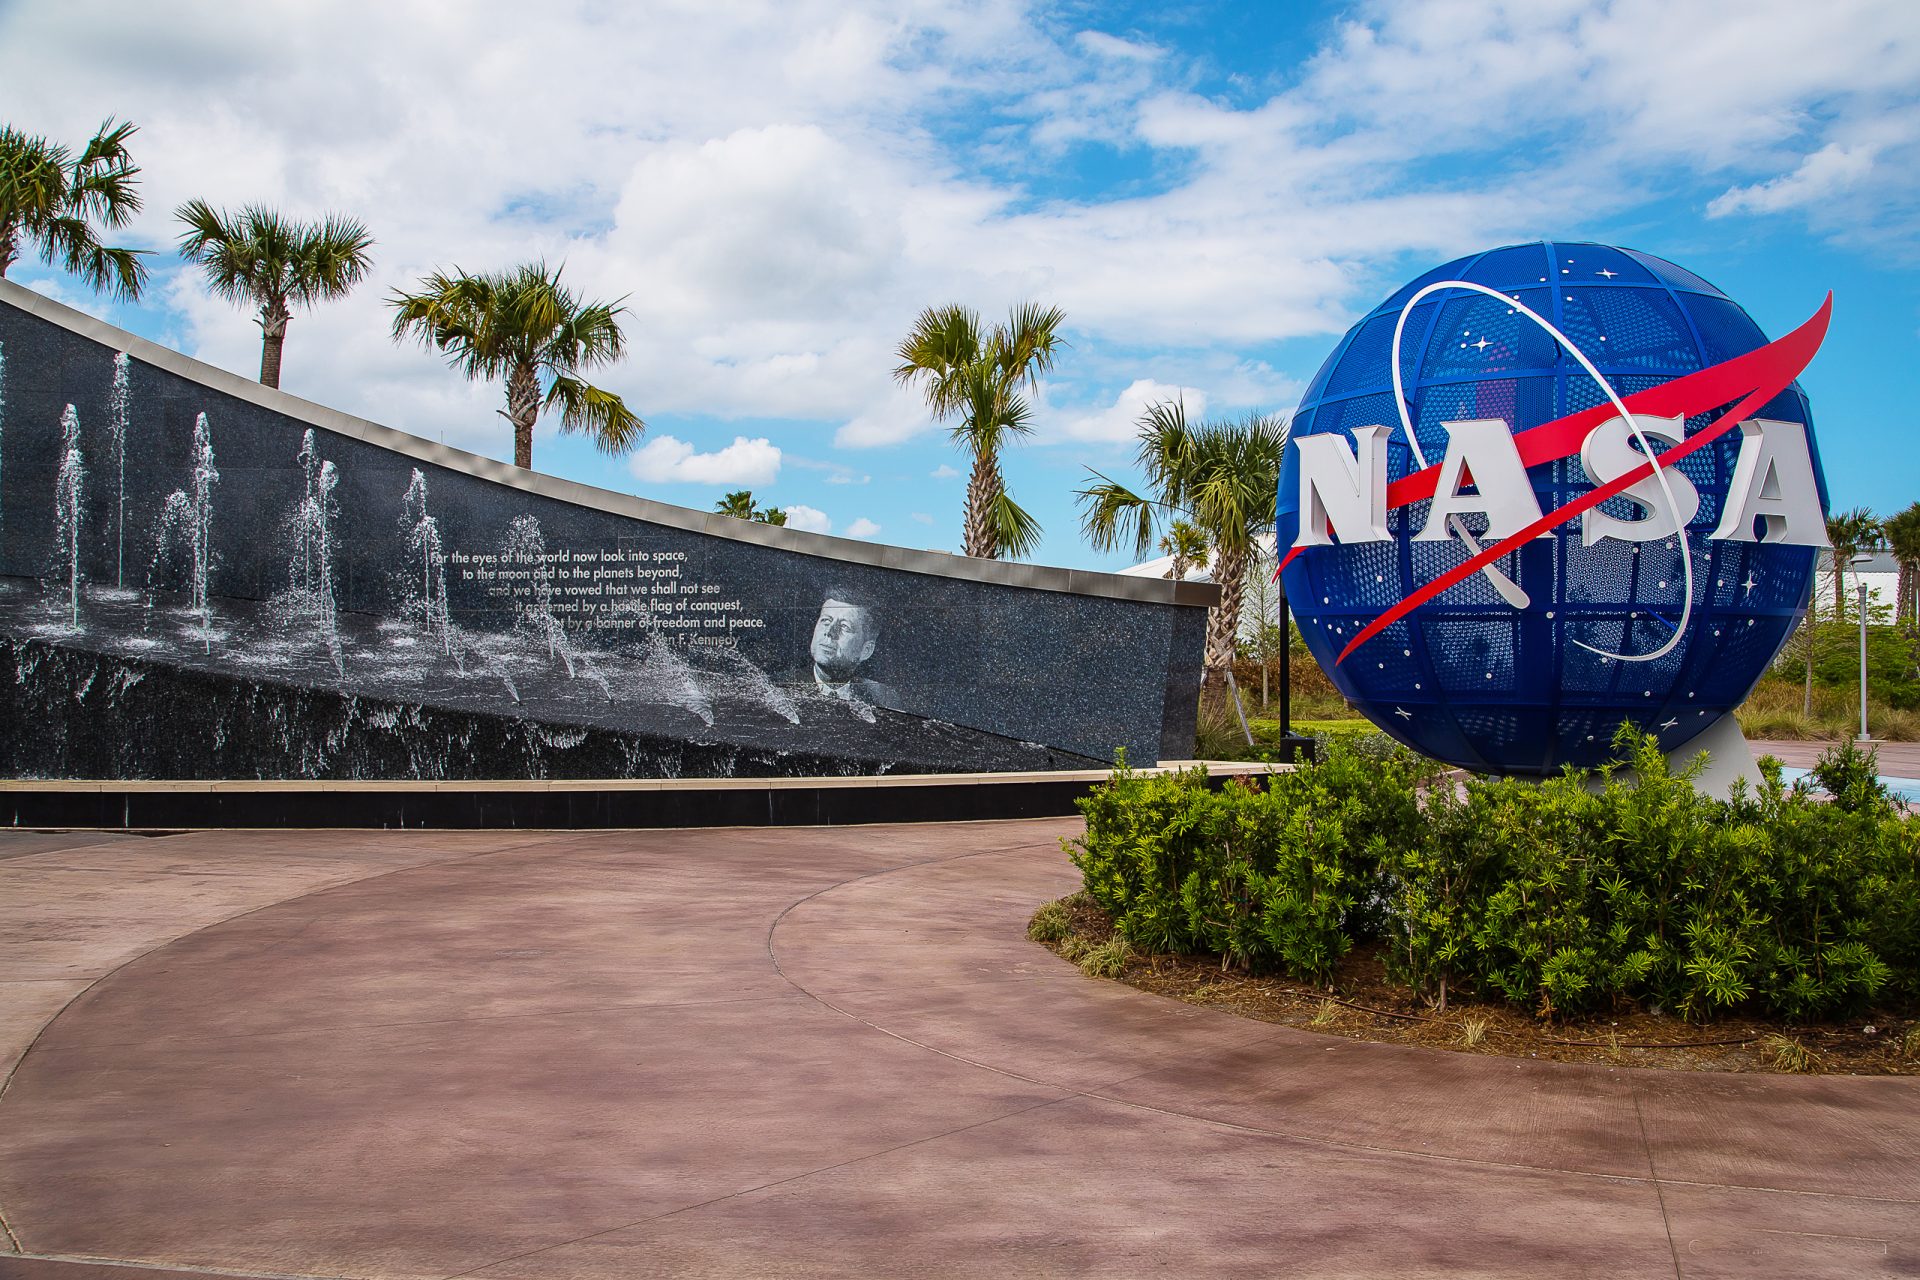 Adolescente deteta erro da NASA e é convidado para fazer a análise ao problema